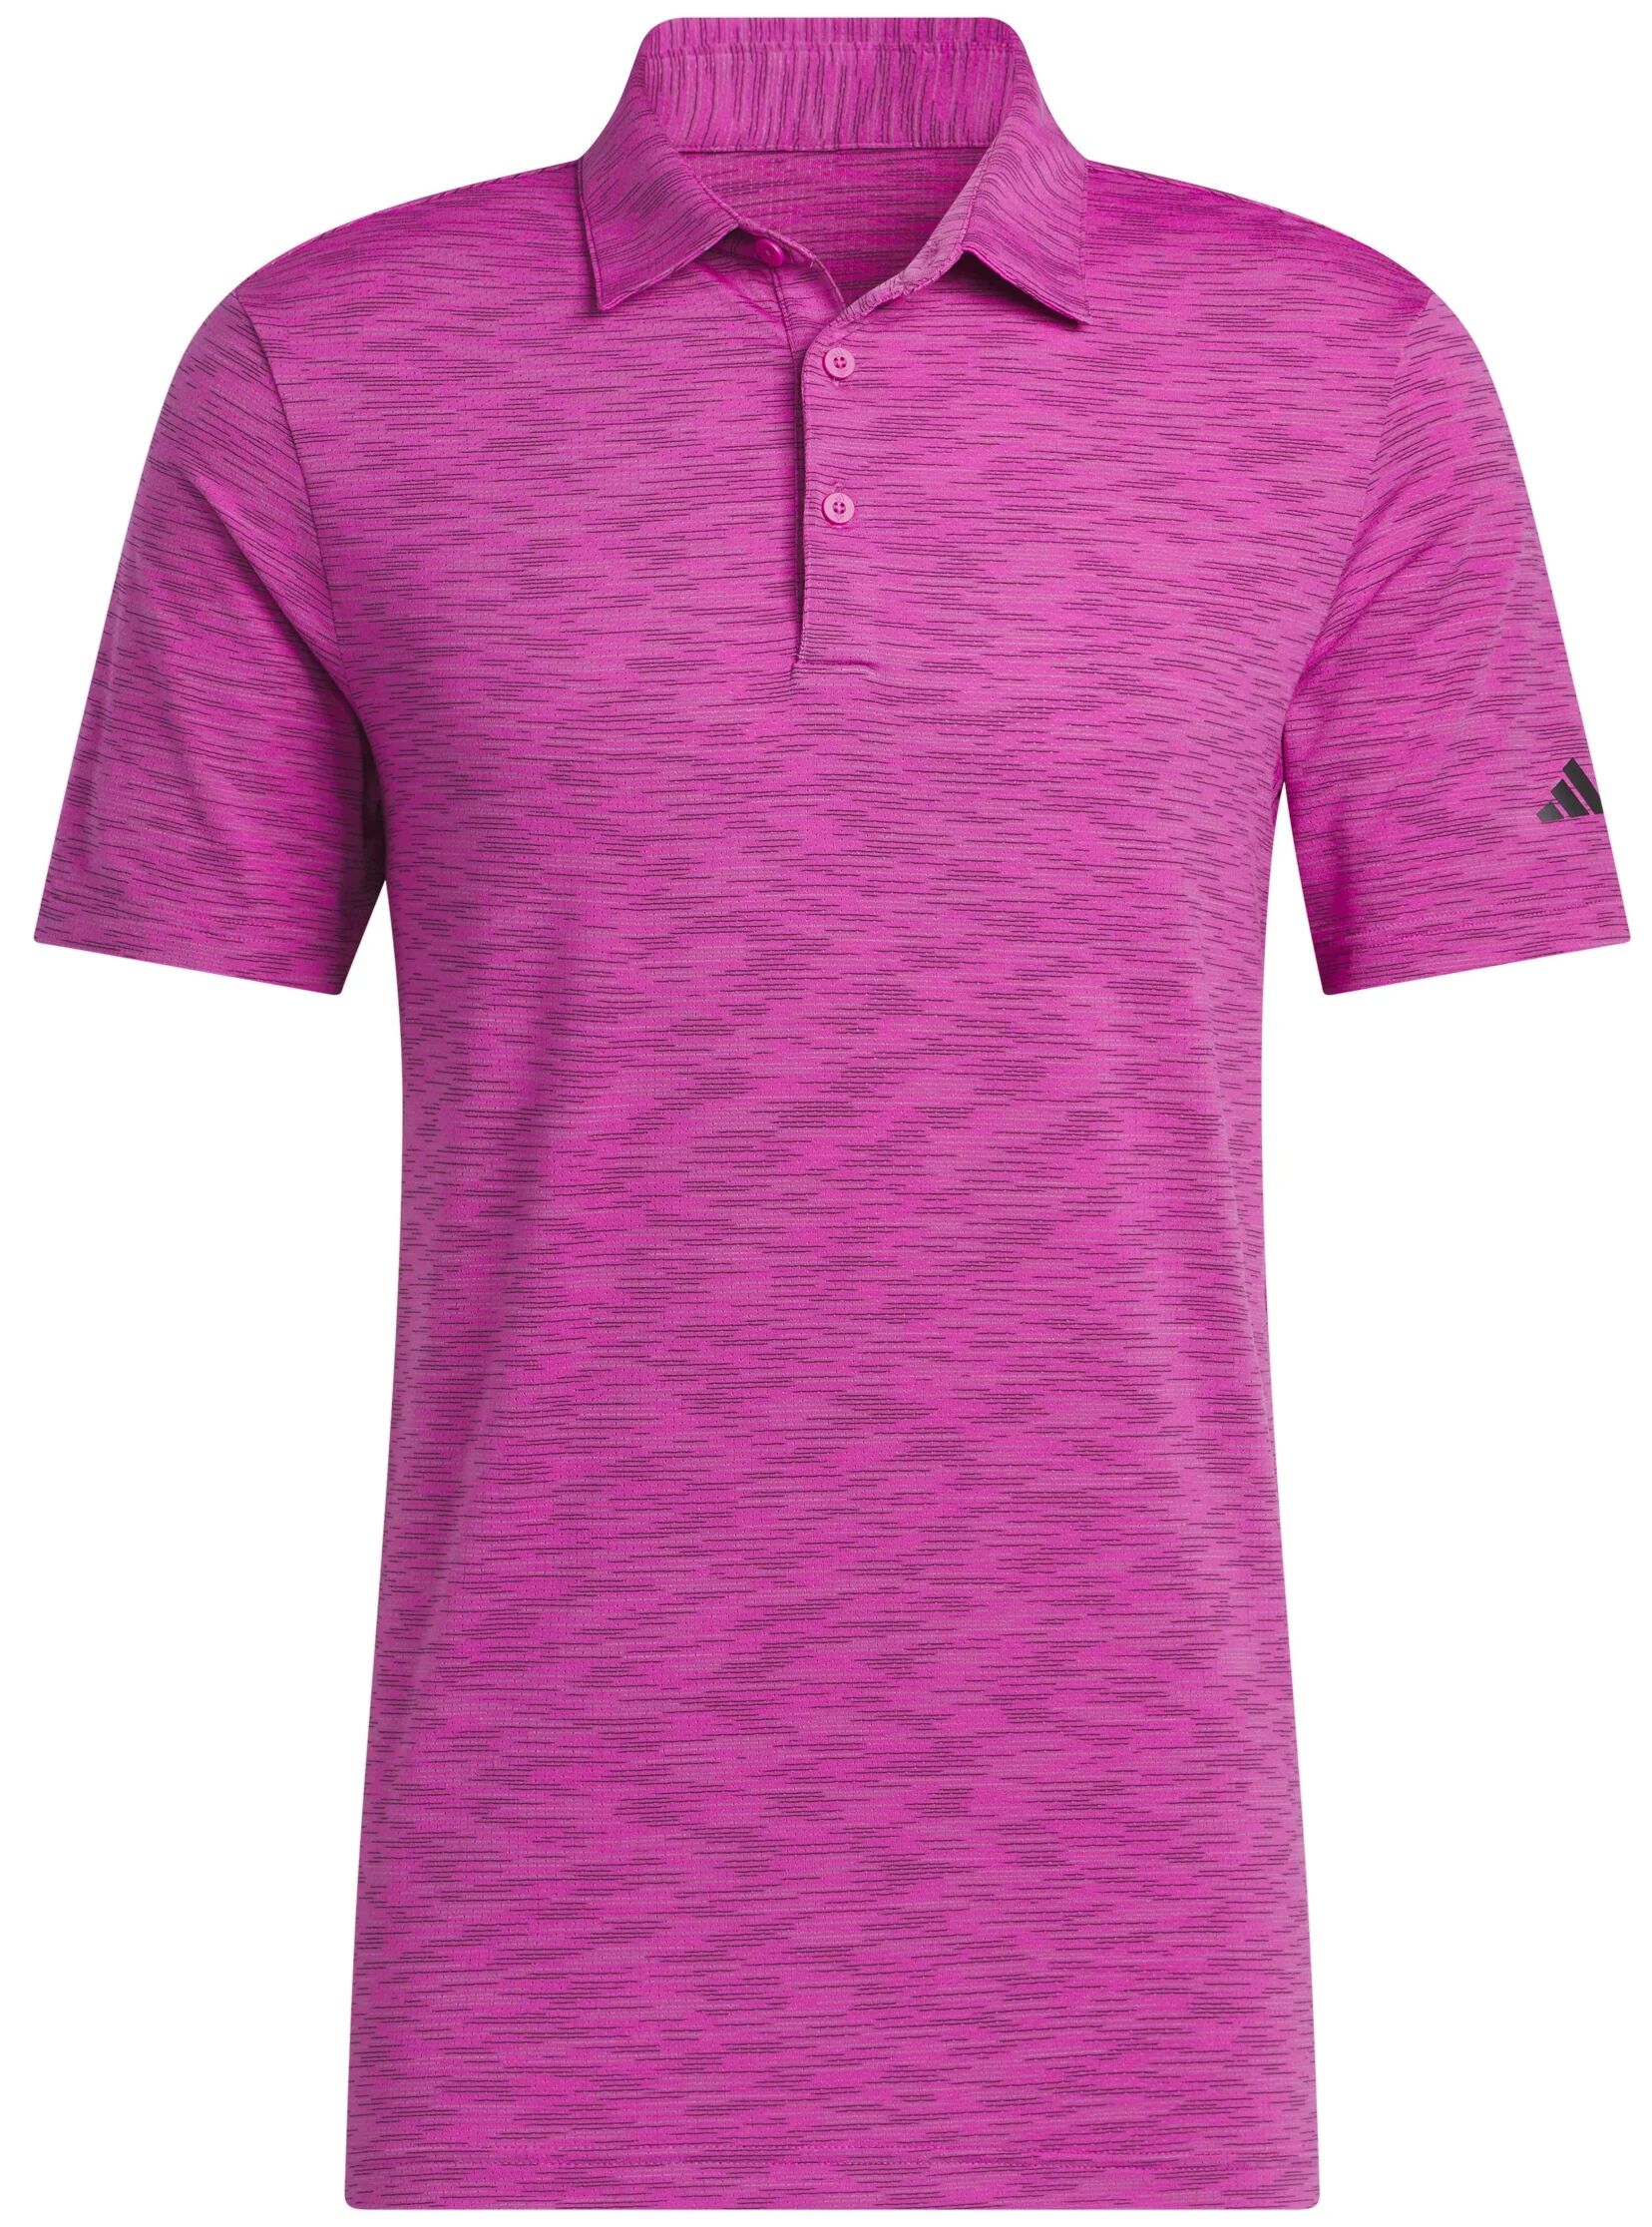 adidas Space Dye Men's Golf Polo Shirt - Pink, Size: Small